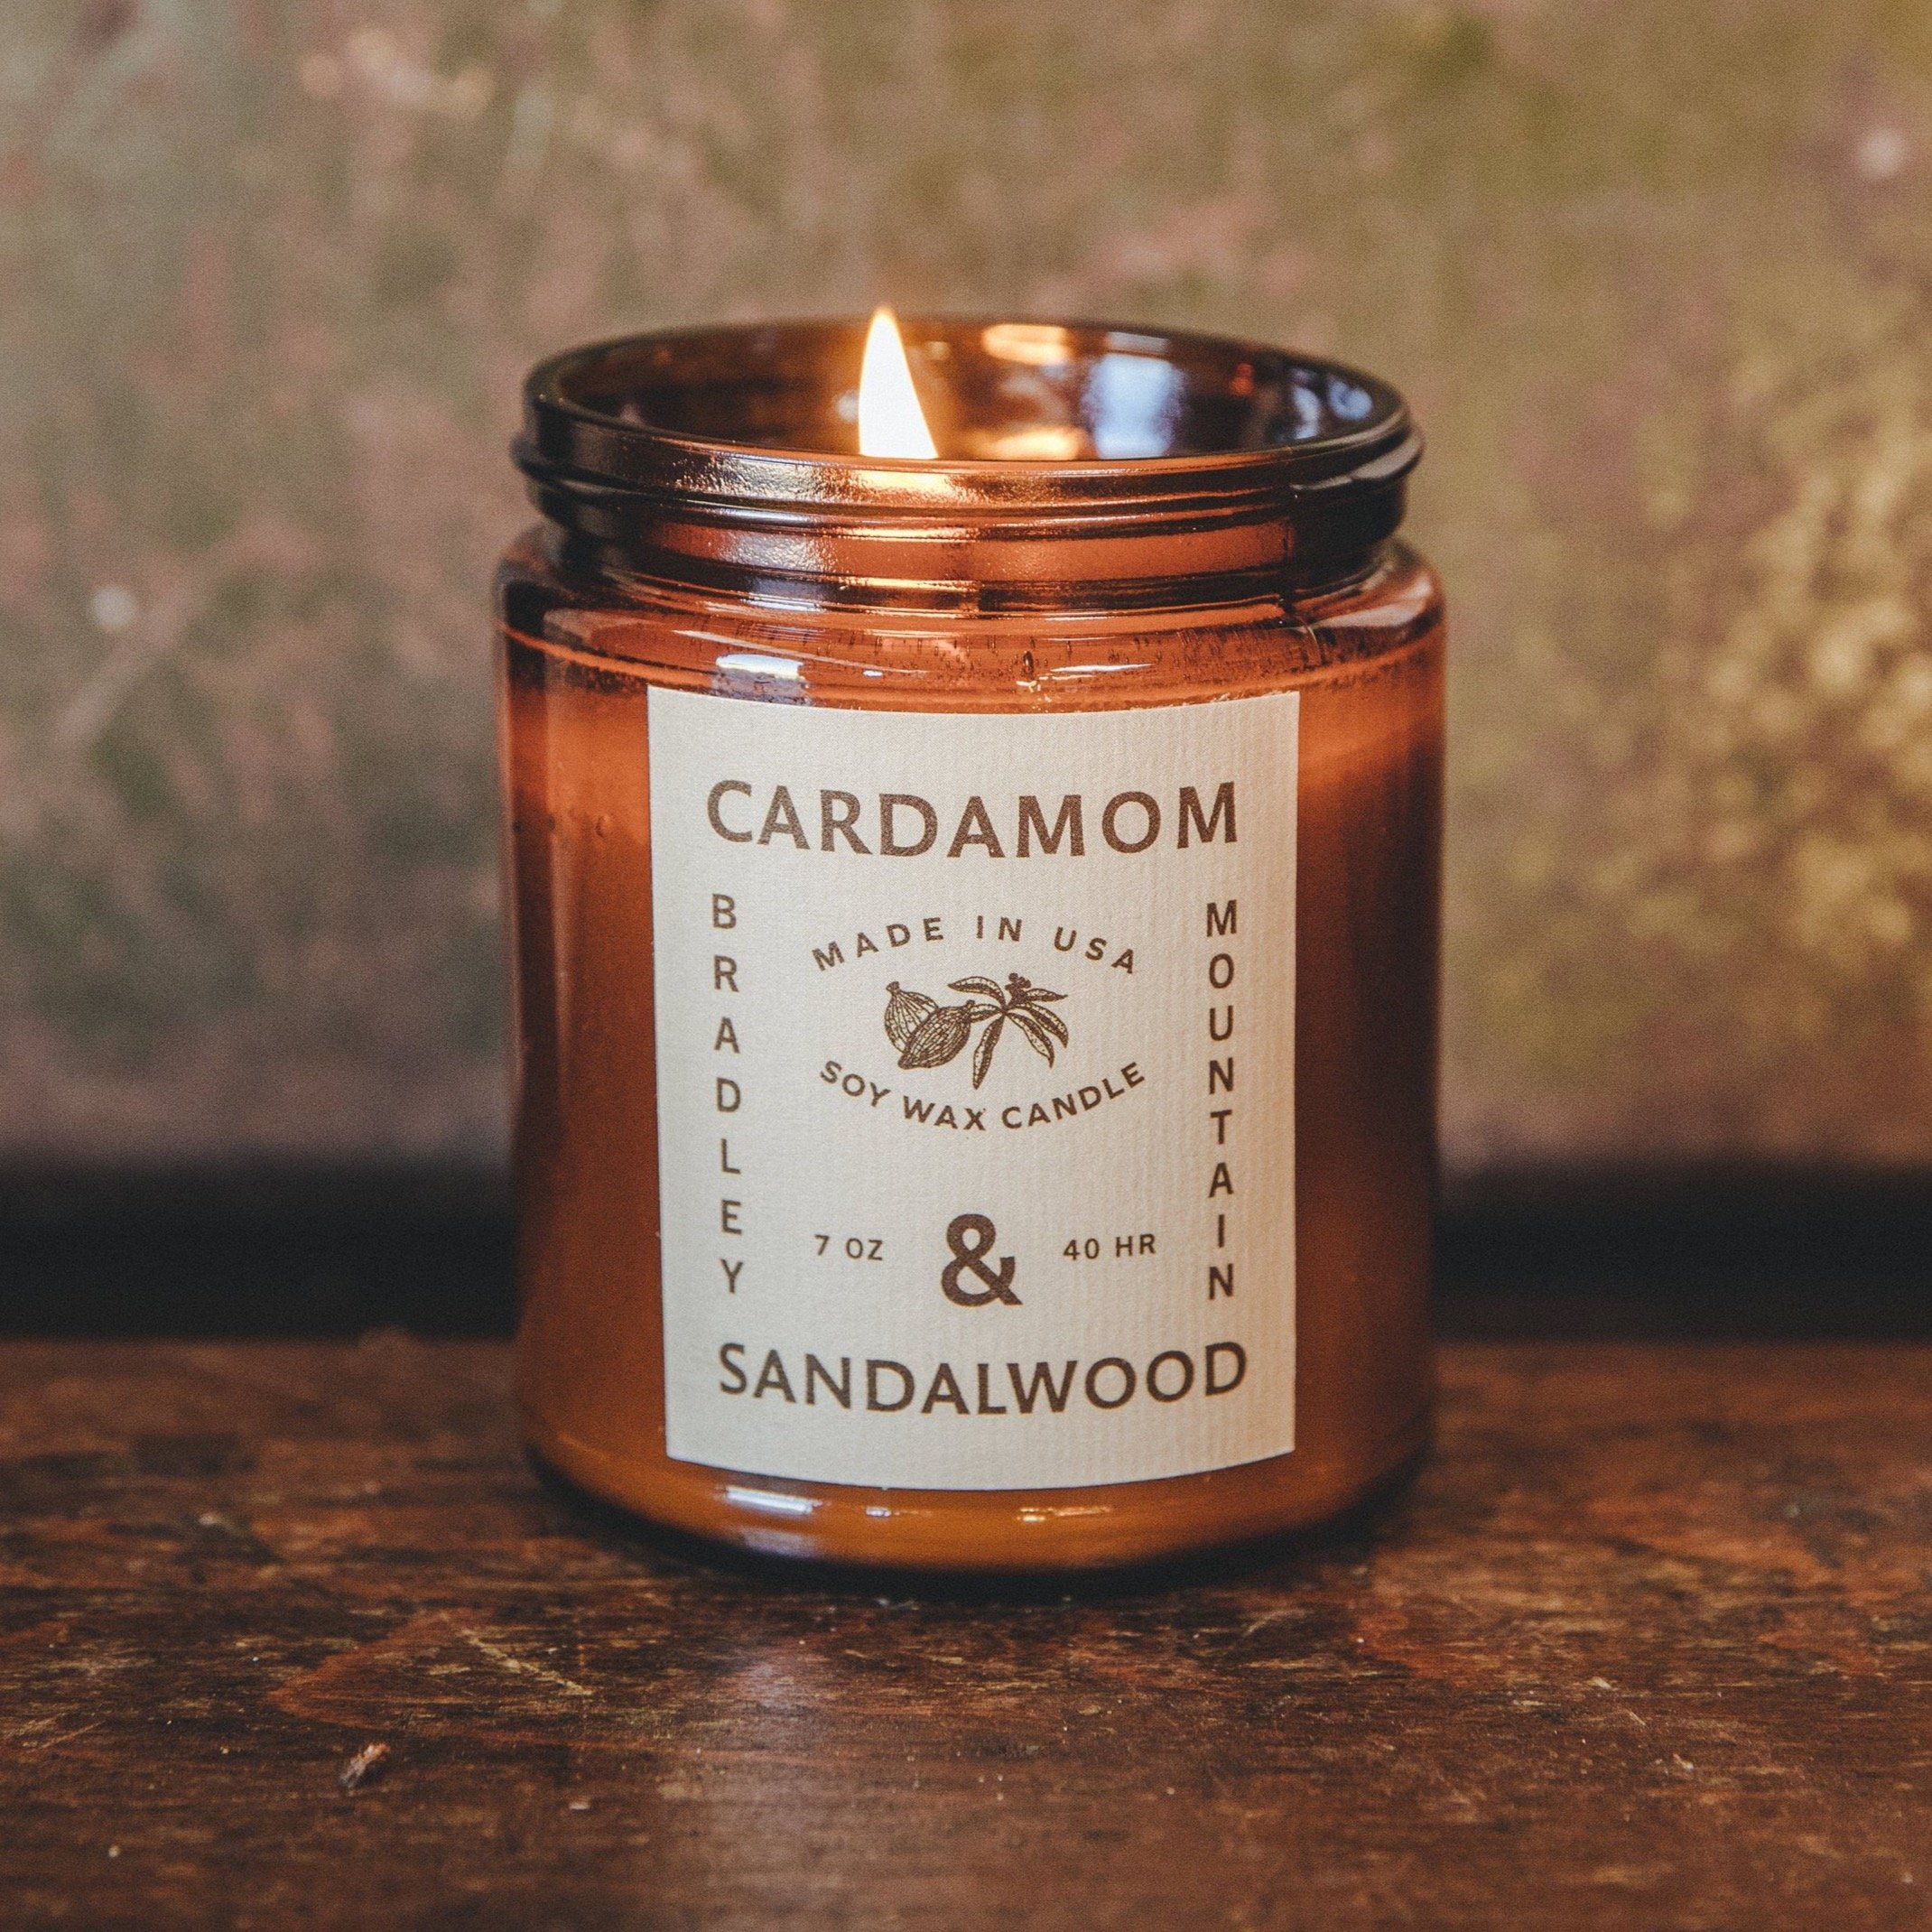 Cardamom & sandalwood candle